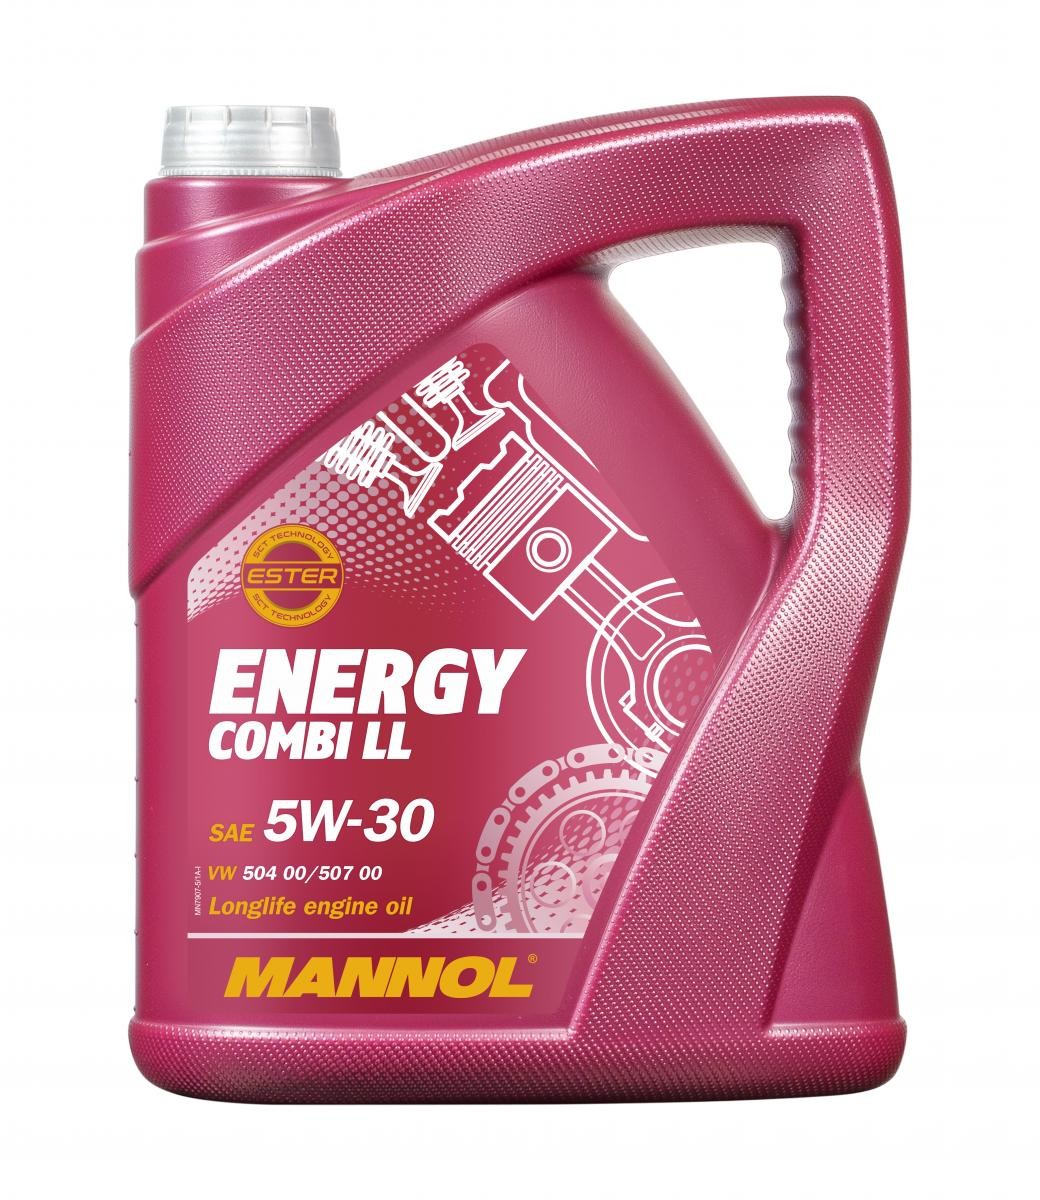 MANNOL ENERGY COMBI LL 5W-30, 5l Motor oil MN7907-5 buy